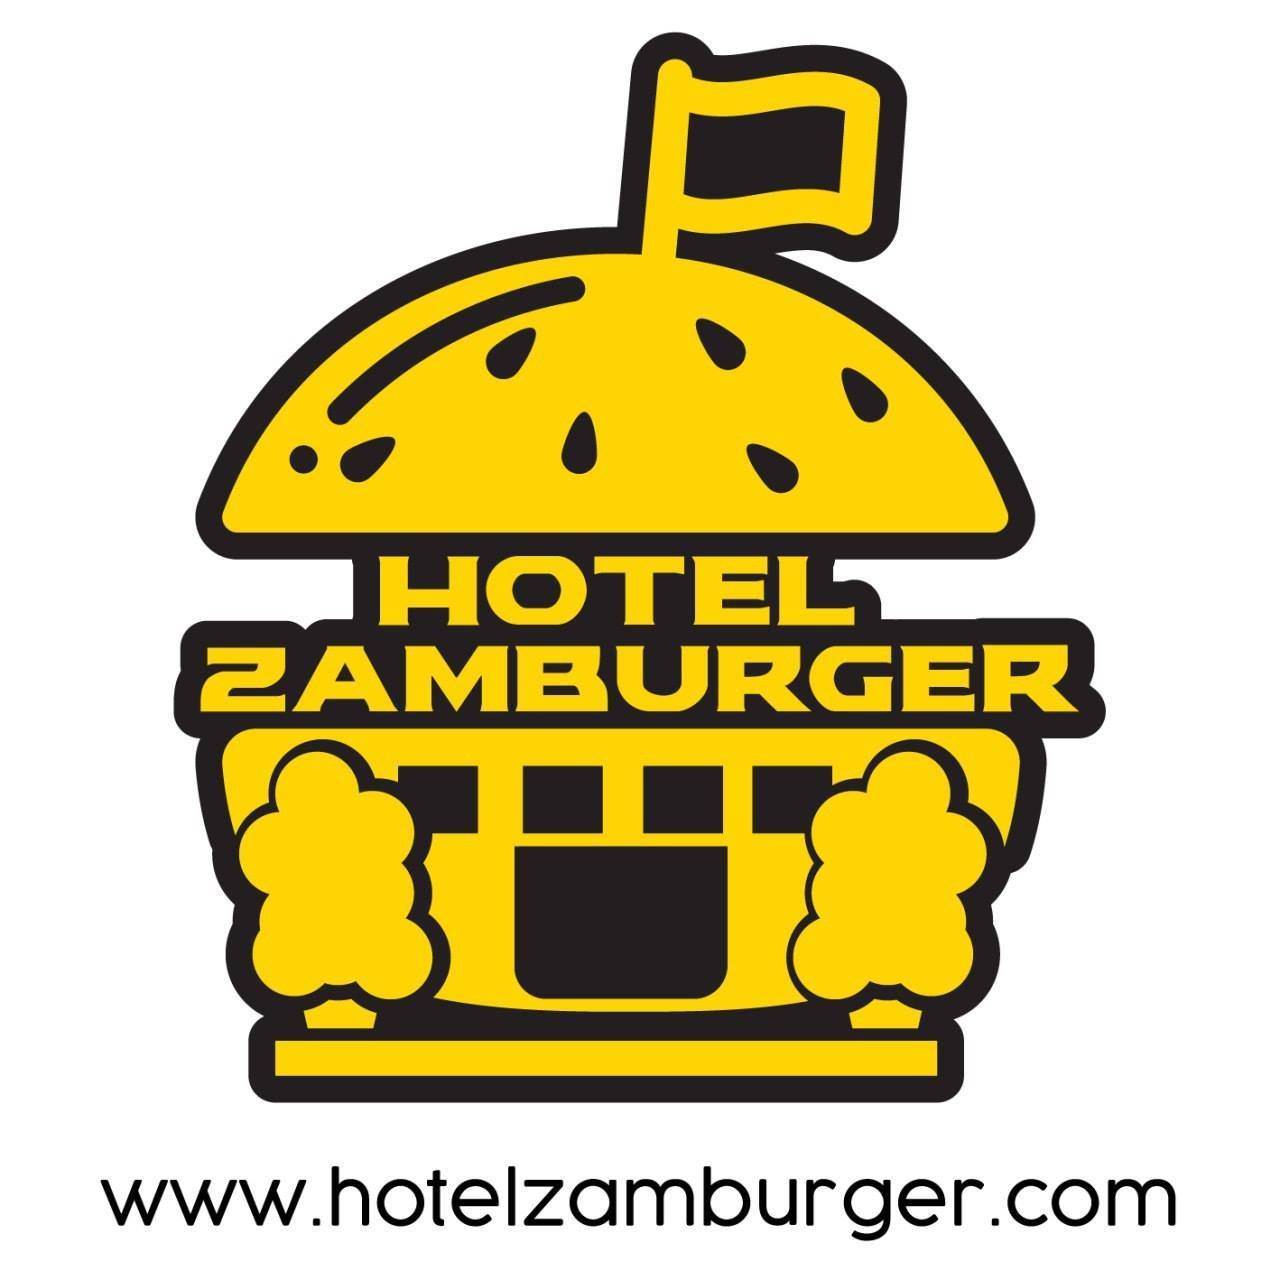 Hotel Zamburger